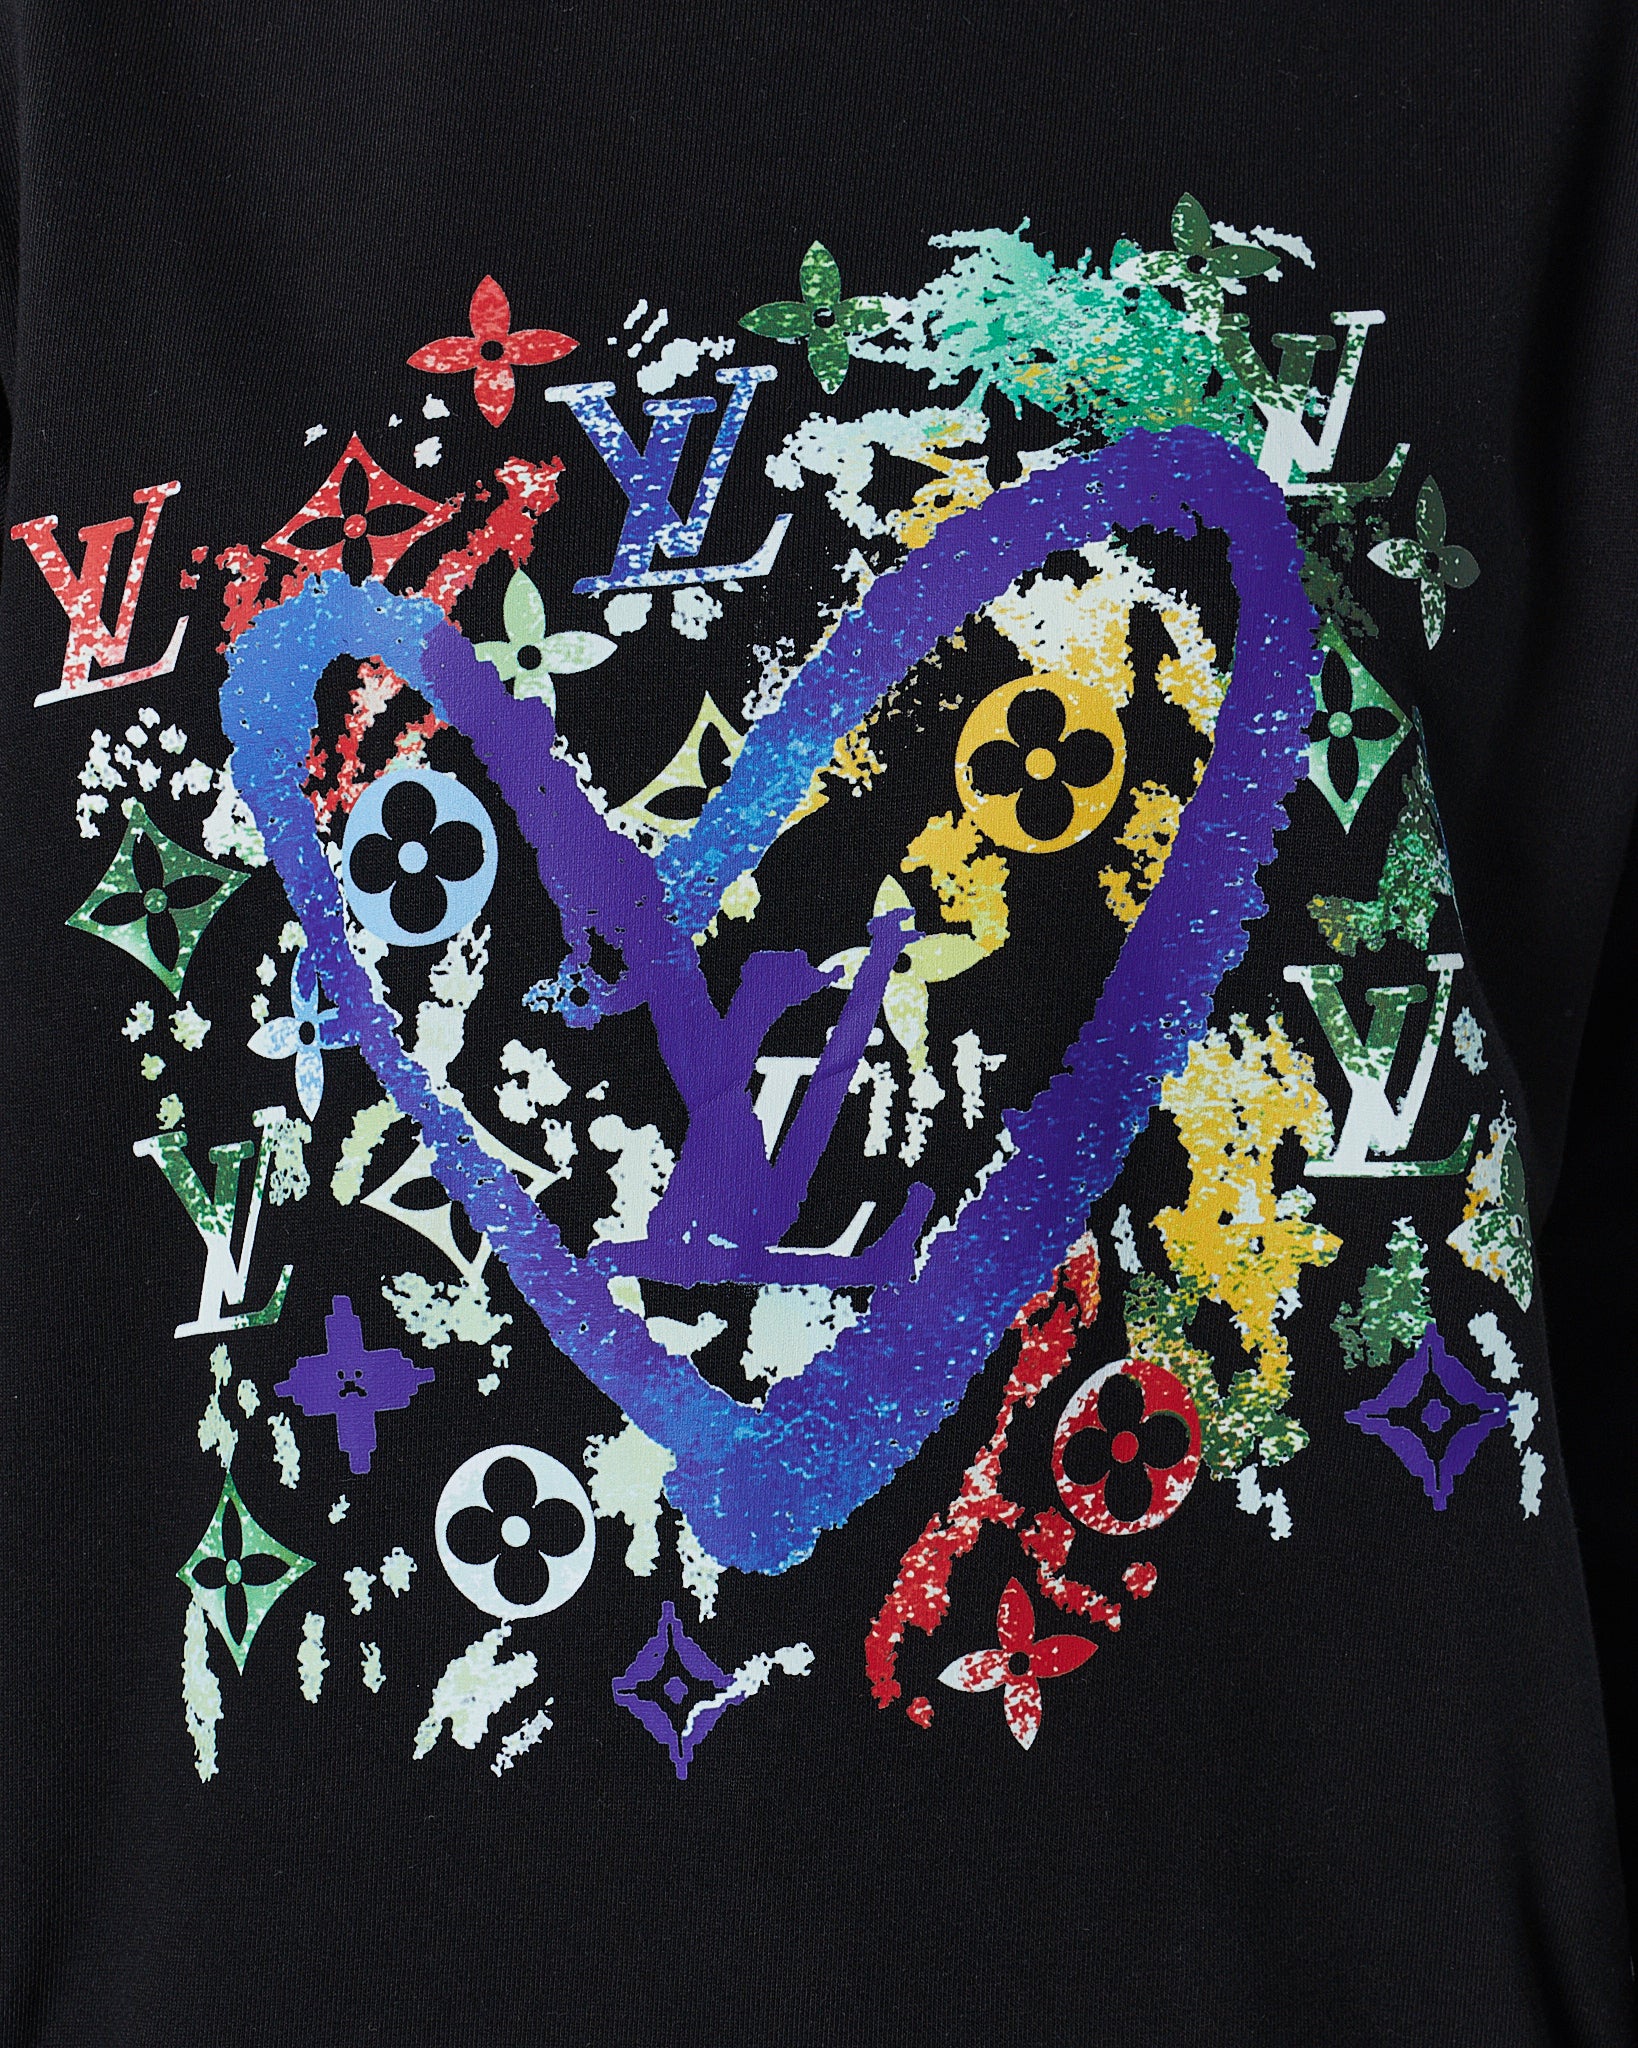 LV Heart Colorful Monogram Unisex Black Sweater 34.90